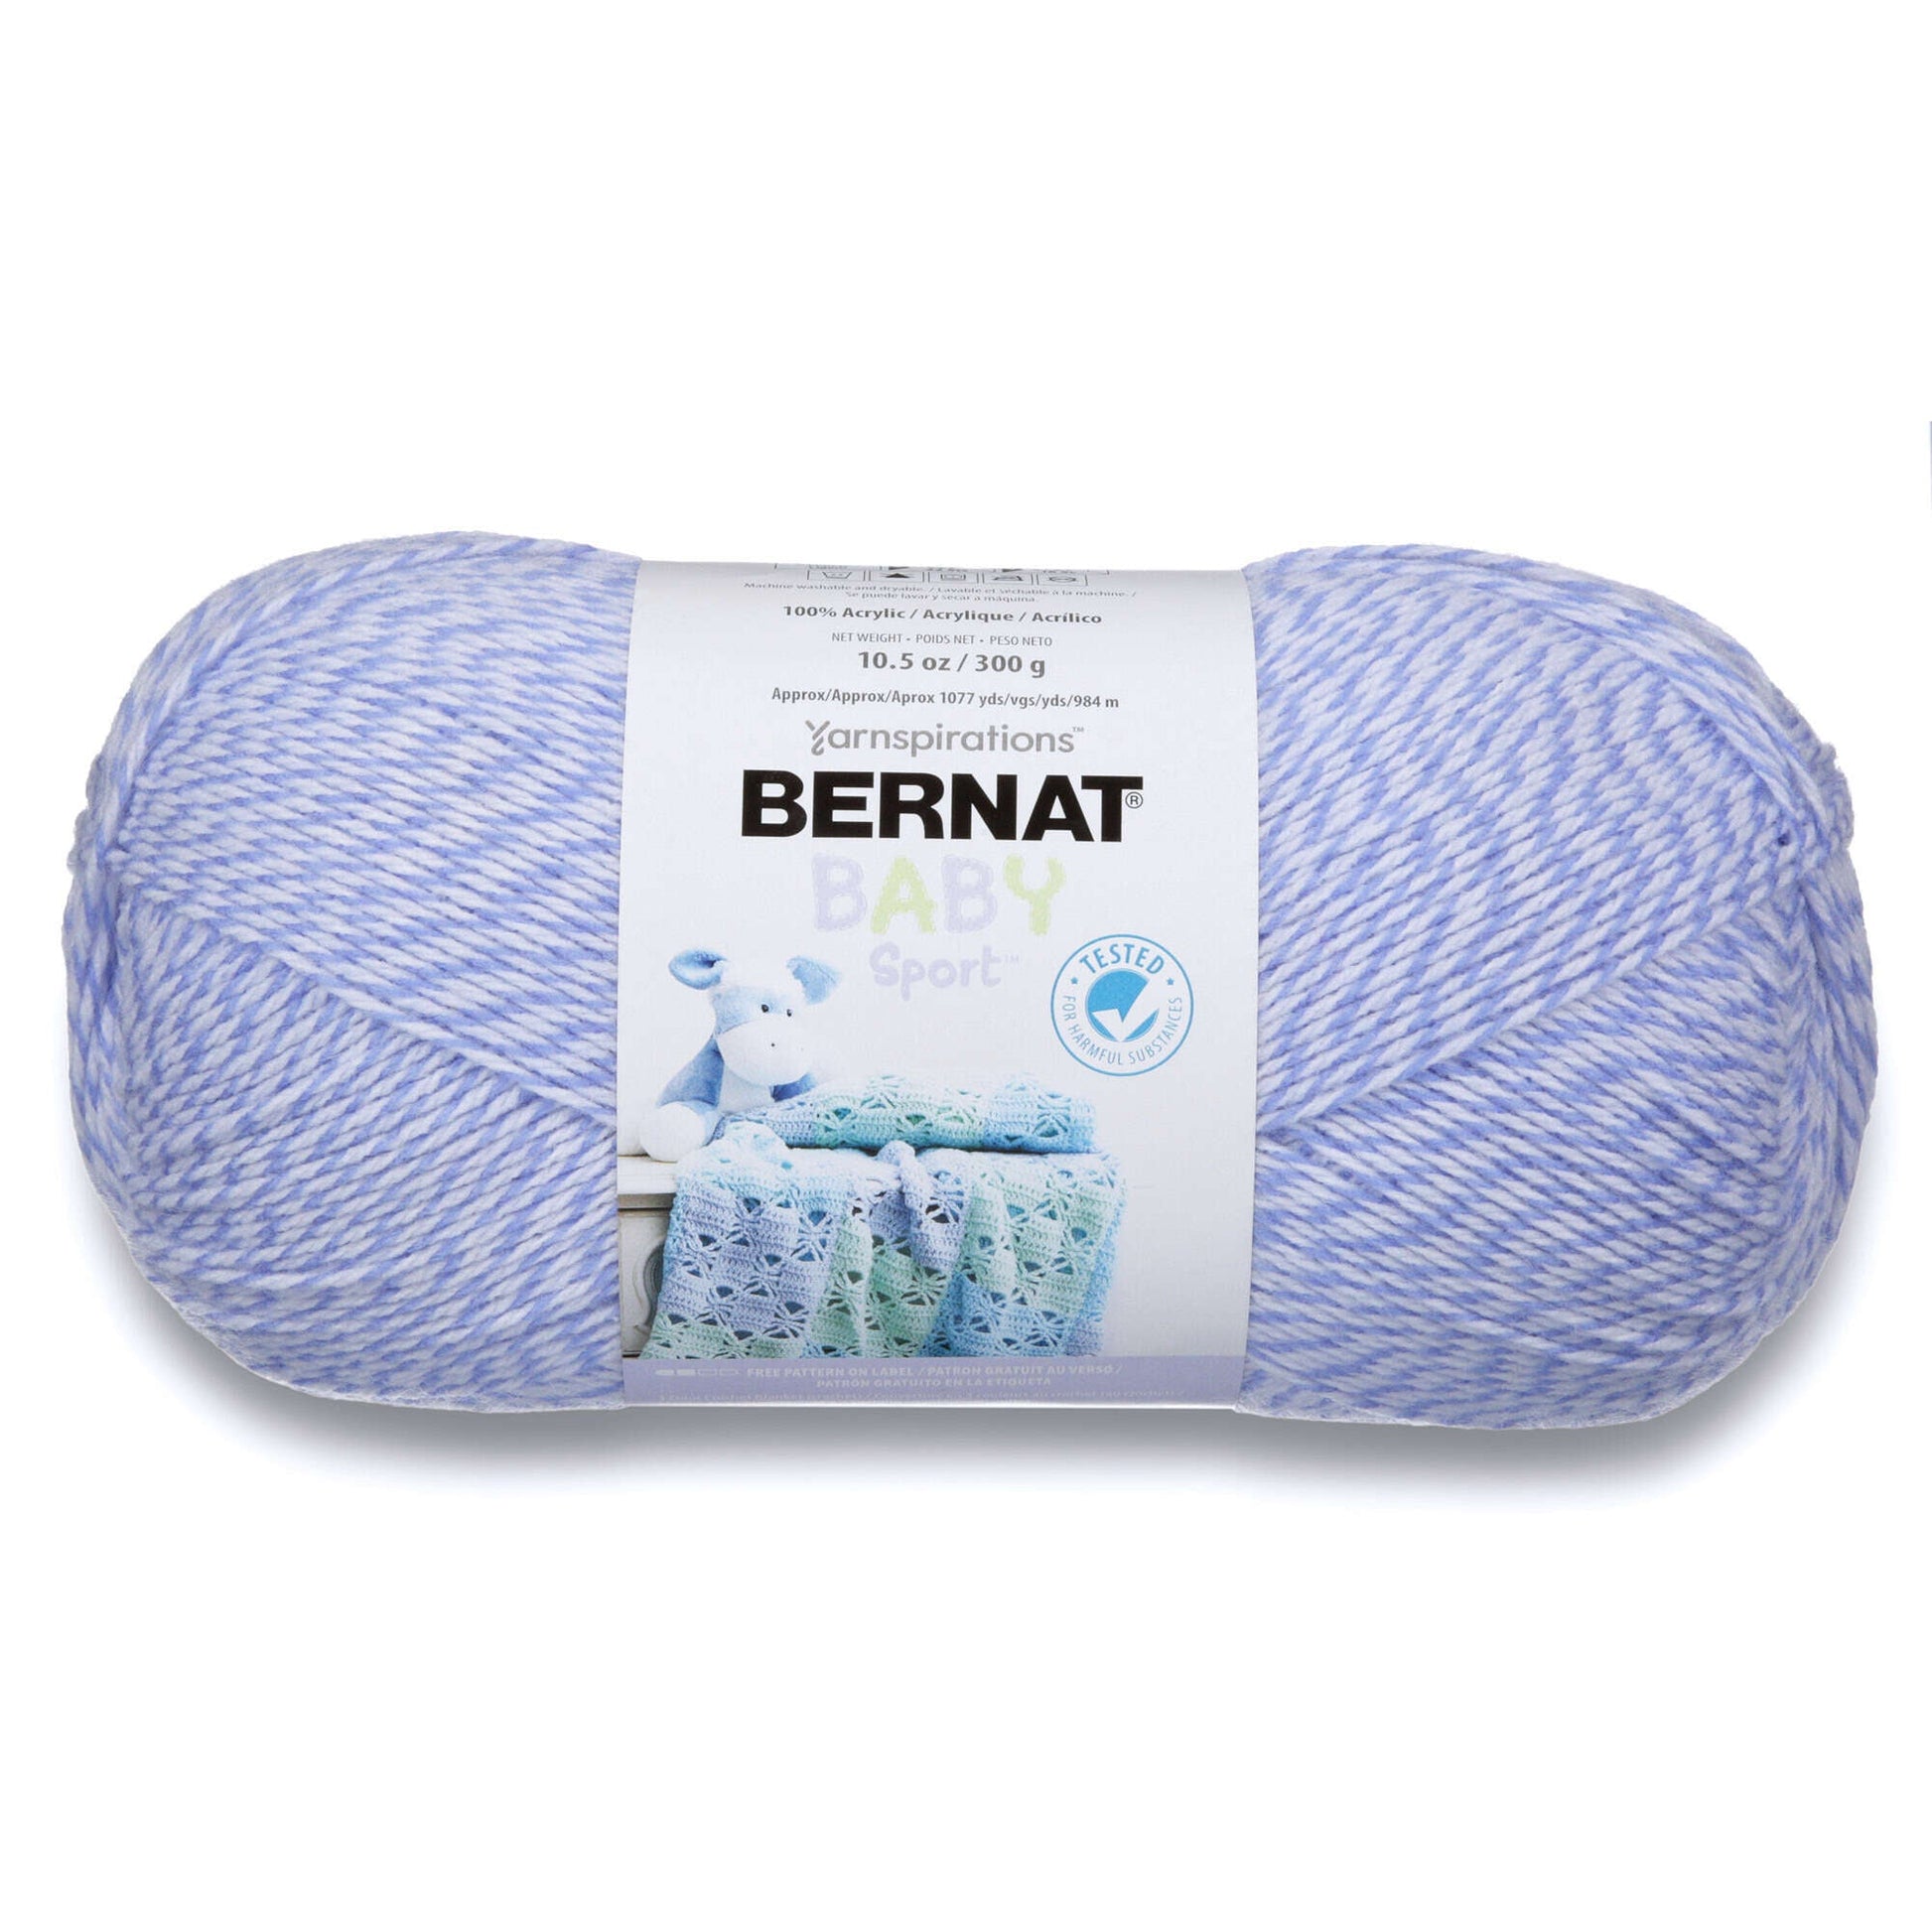 Bernat Baby Sport Yarn (300g/10.5oz)